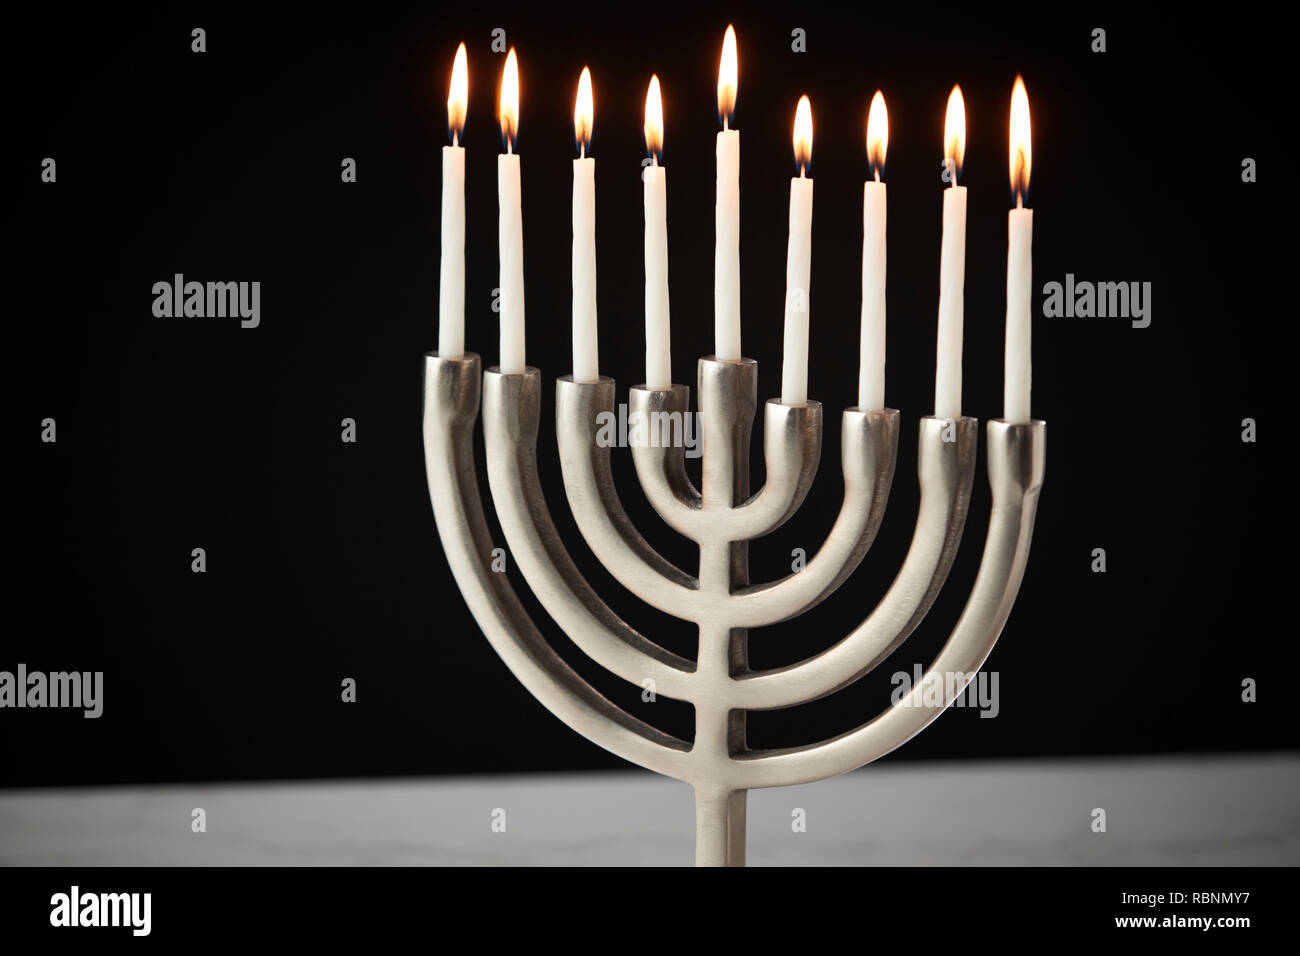 Lit Candles On Metal Hanukkah Menorah On Marble Surface Against Black Studio Background Stock Photo